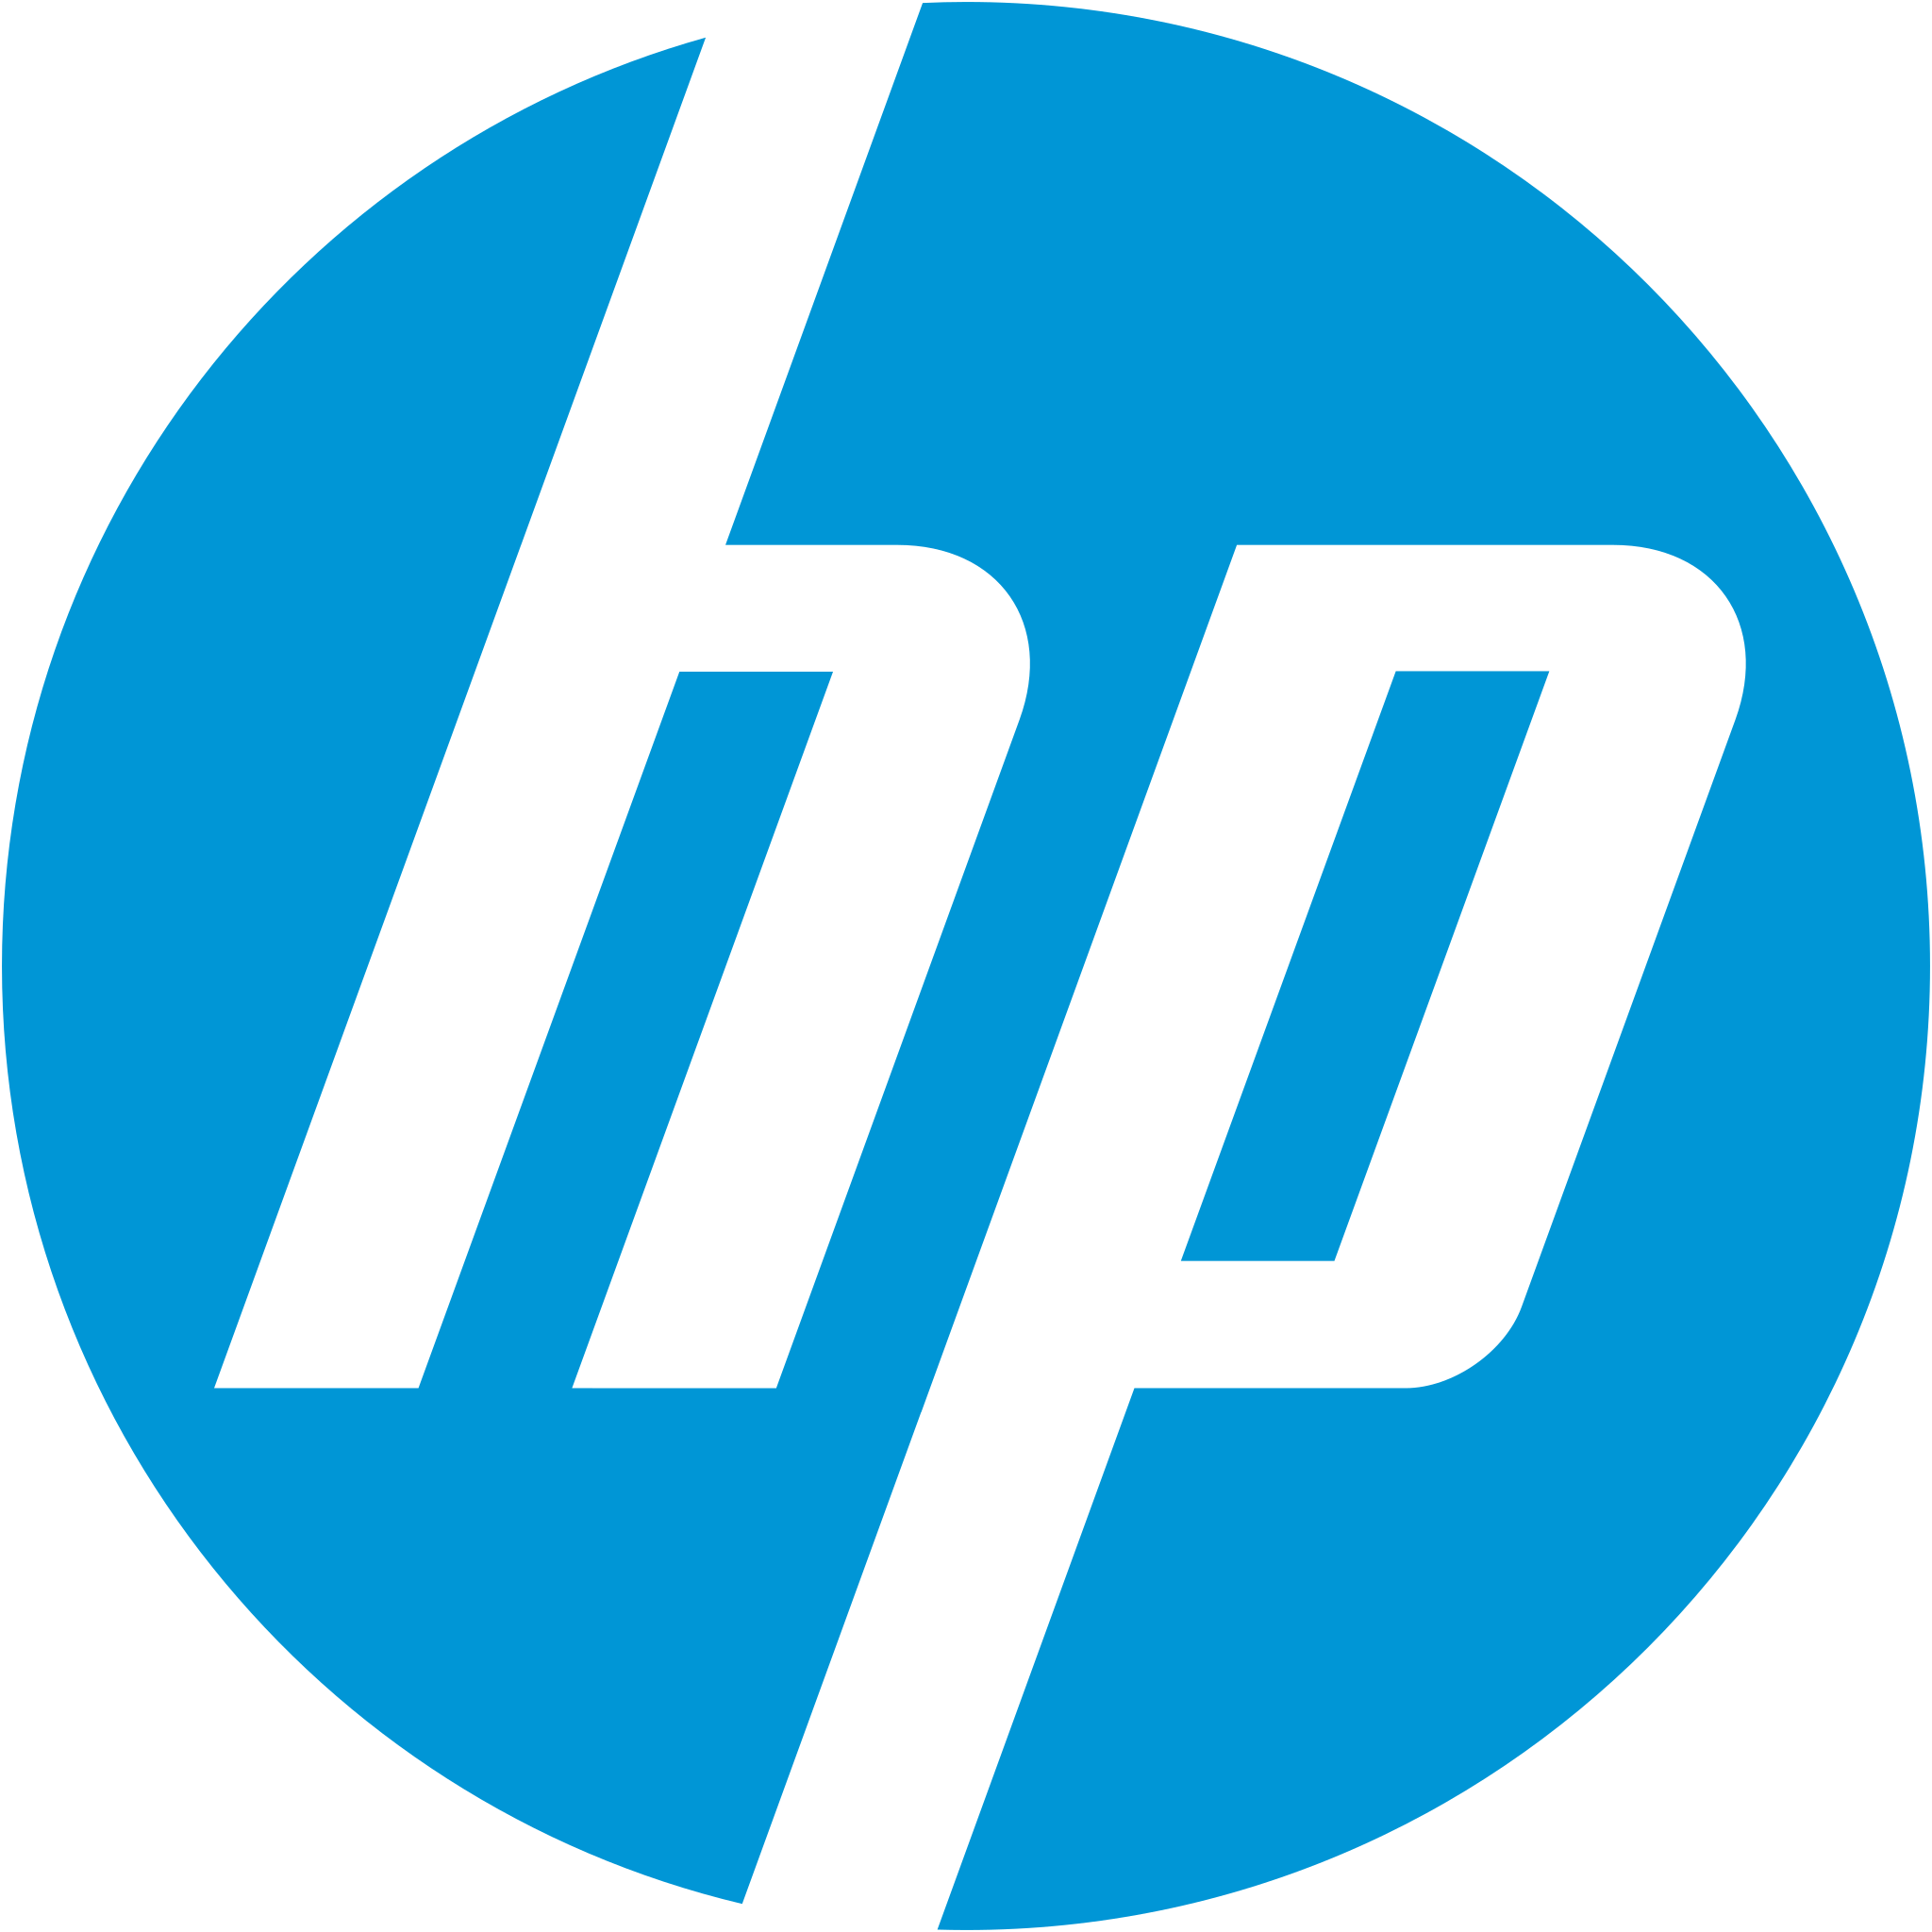 HP image